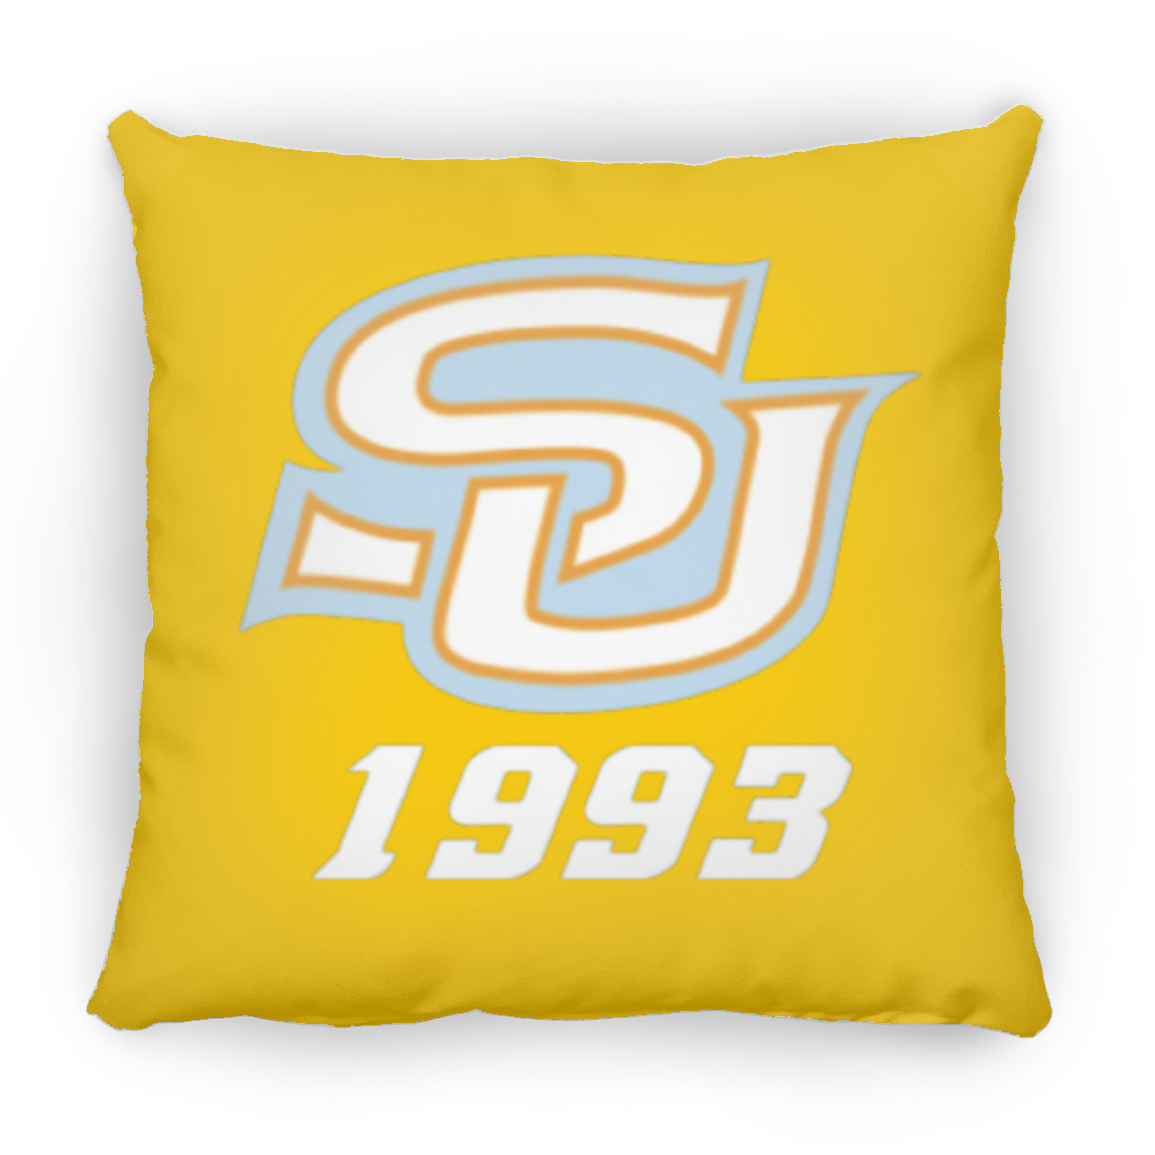 SU 1993 ZP16 Medium Square Pillow